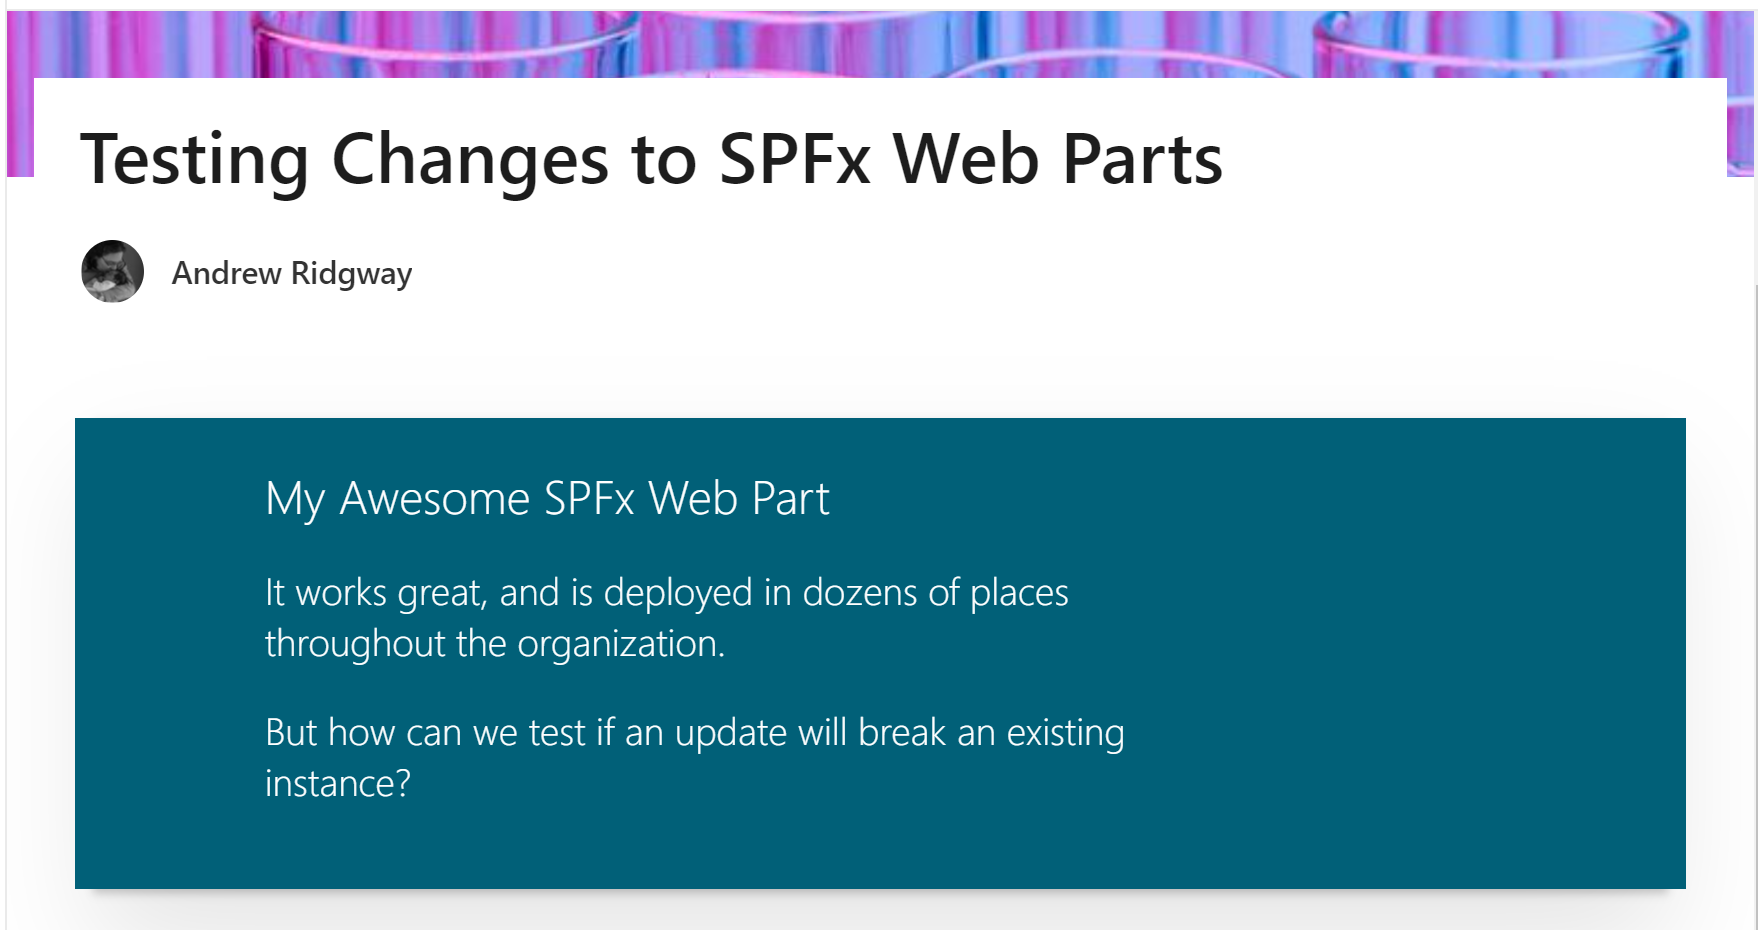 SharePoint SPFx Web Parts